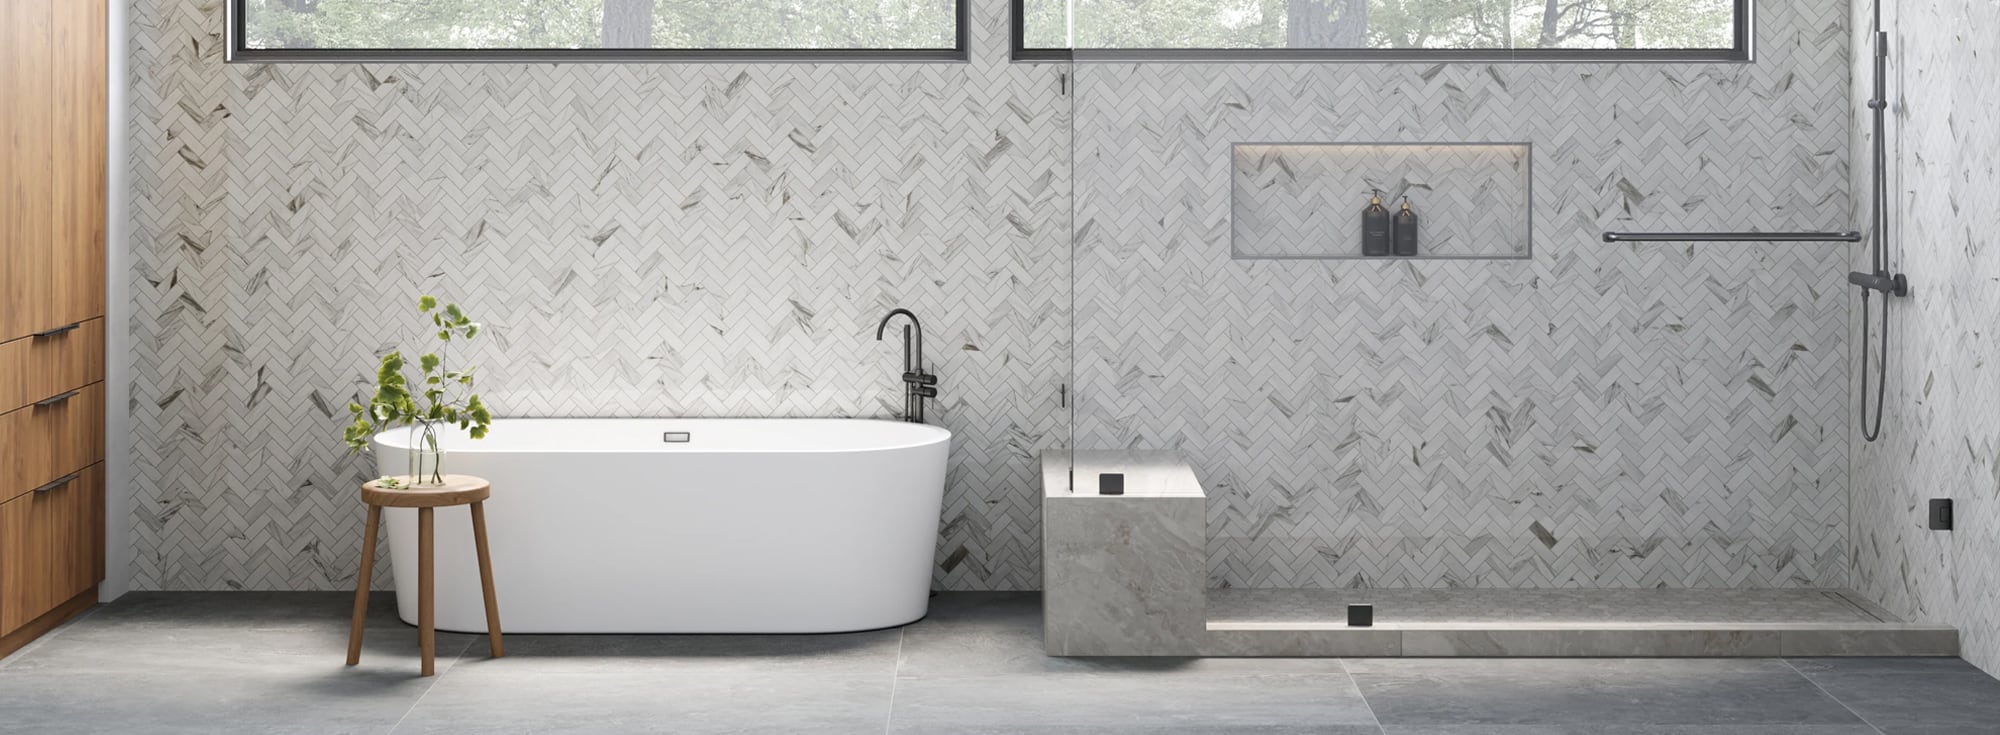 Elegant bathroom featuring light grey tile with herringbone pattern, creating a serene, contemporary retreat